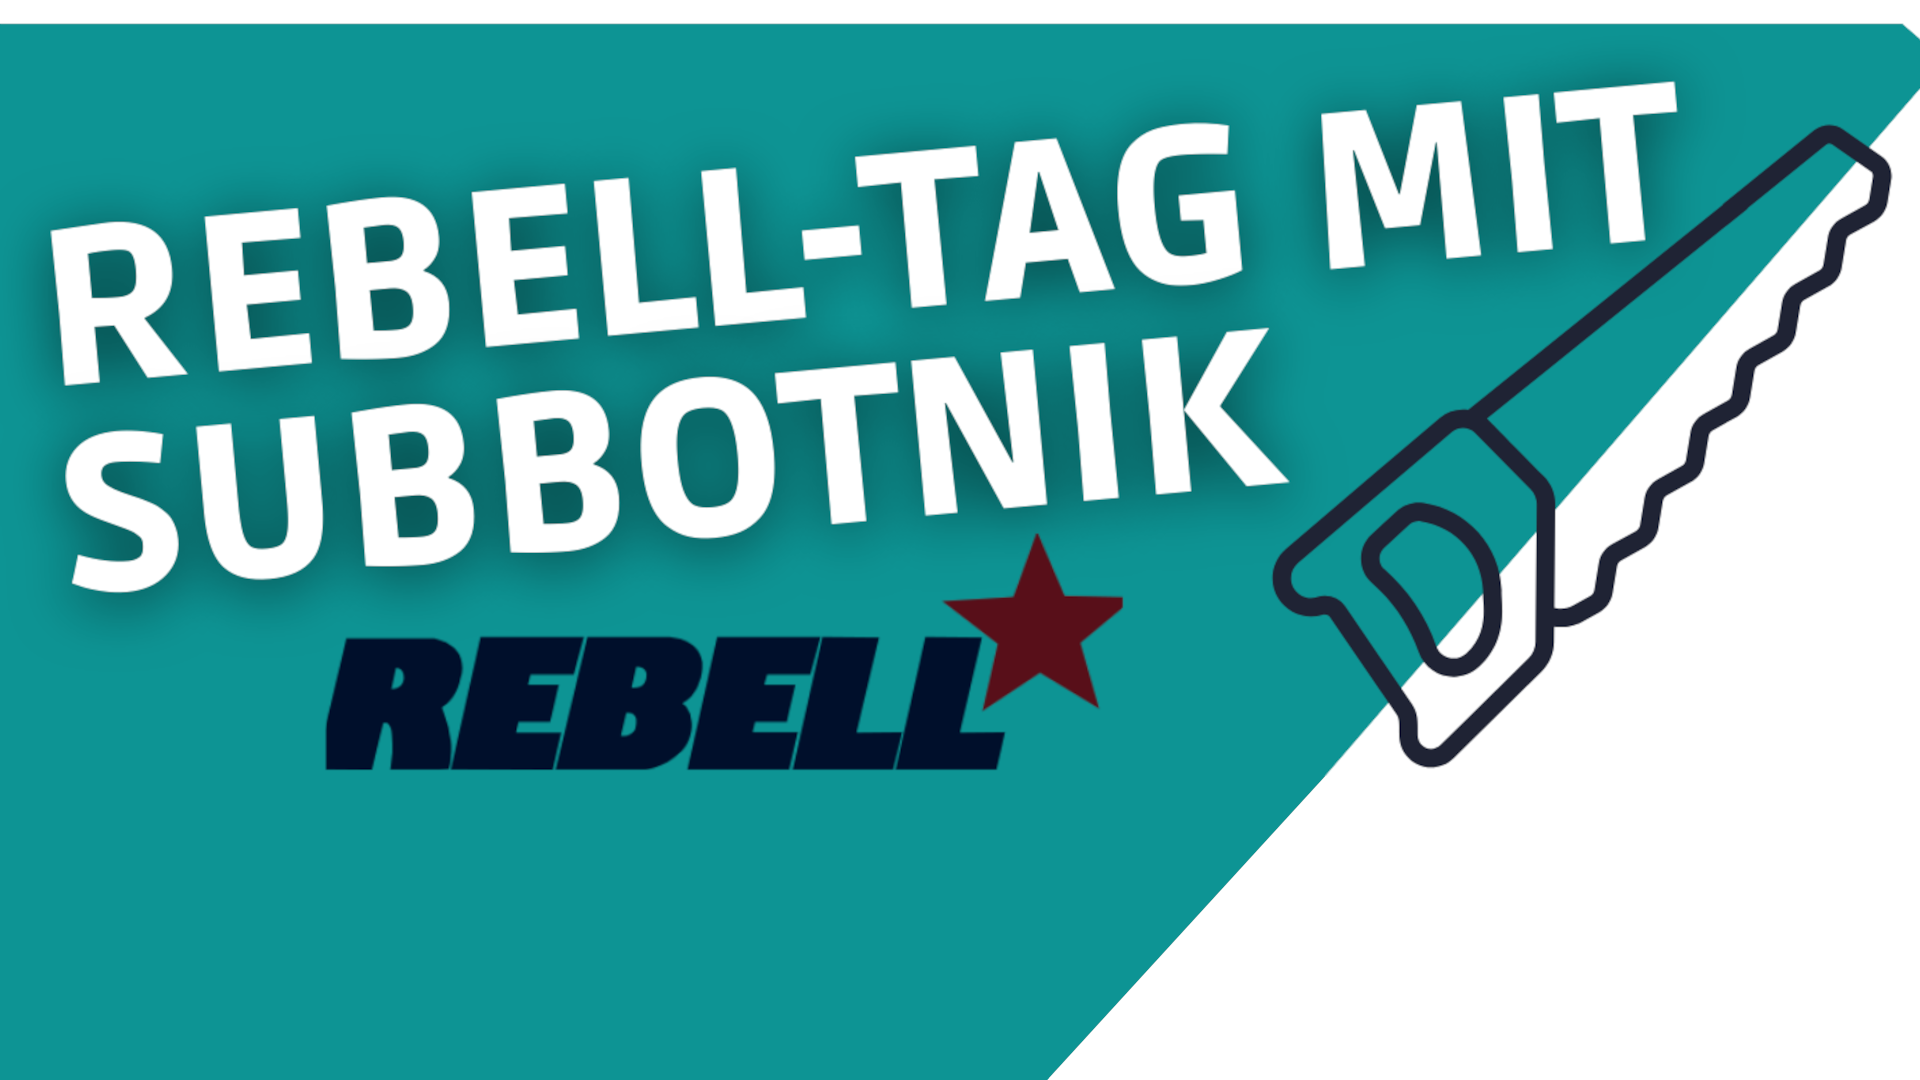 Ulm: Rebell-Tag mit Subbotnik